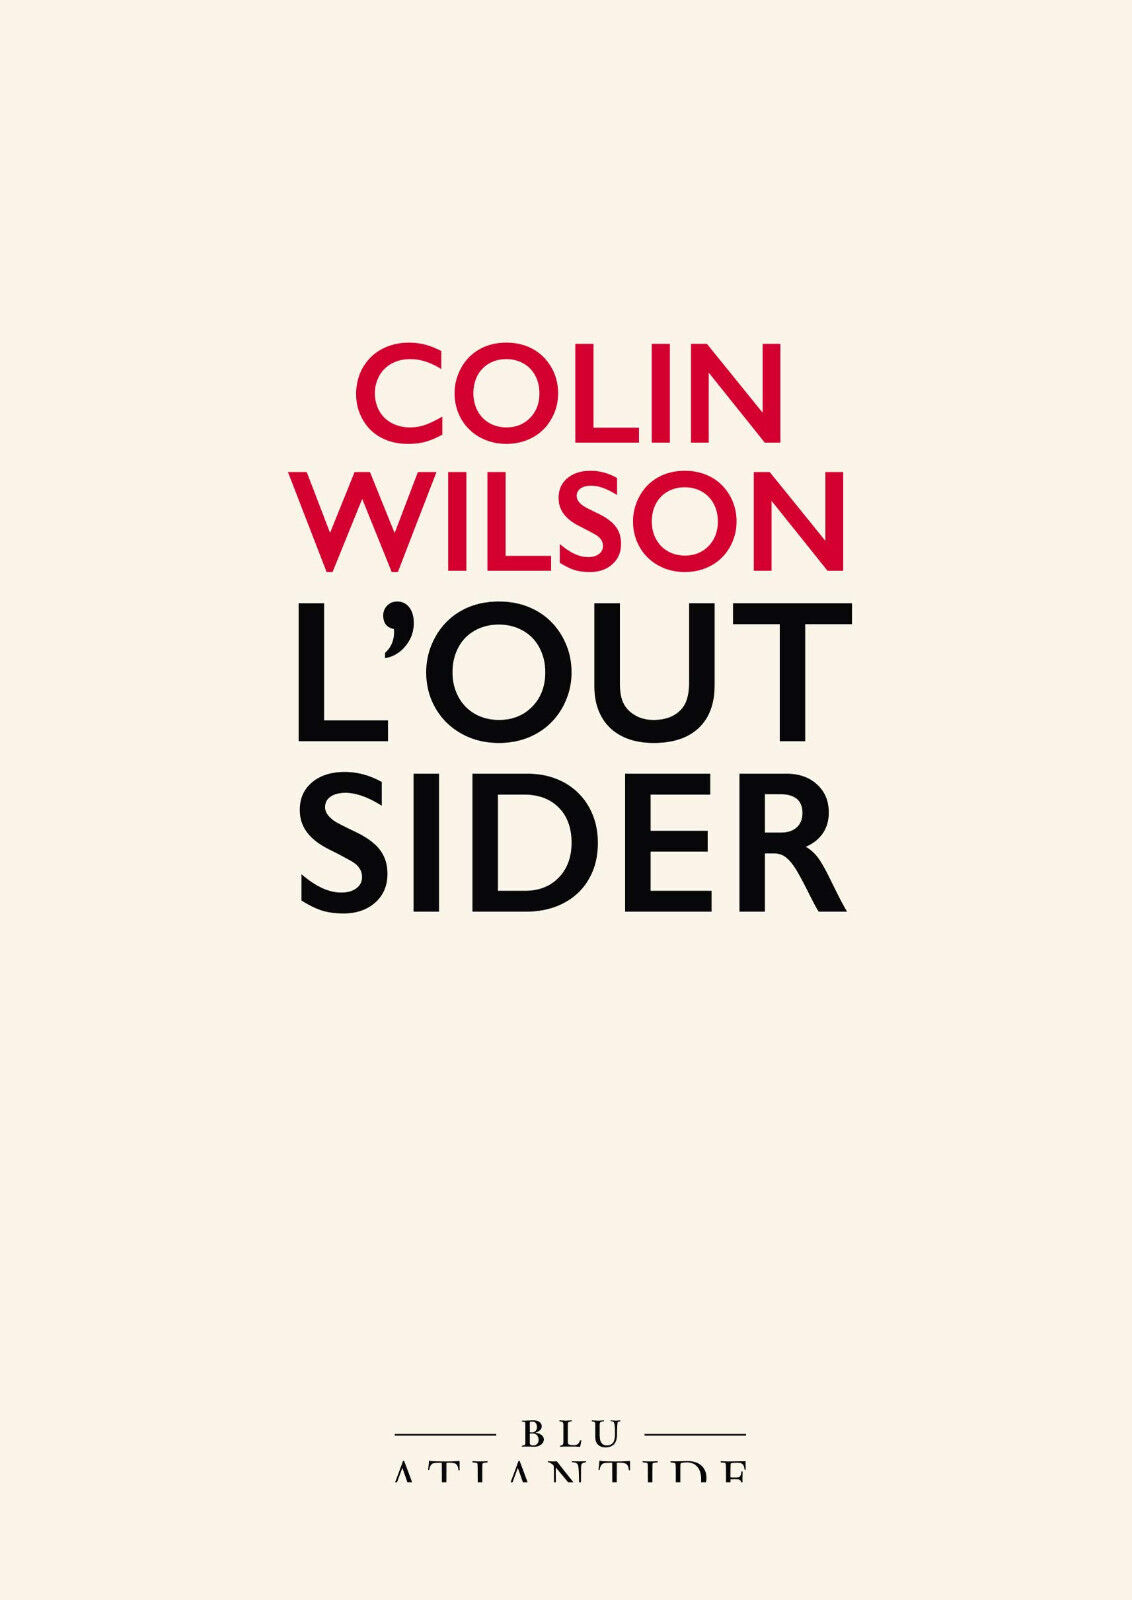 L  outsider - Colin Wilson - Blu Atlantide, 2020